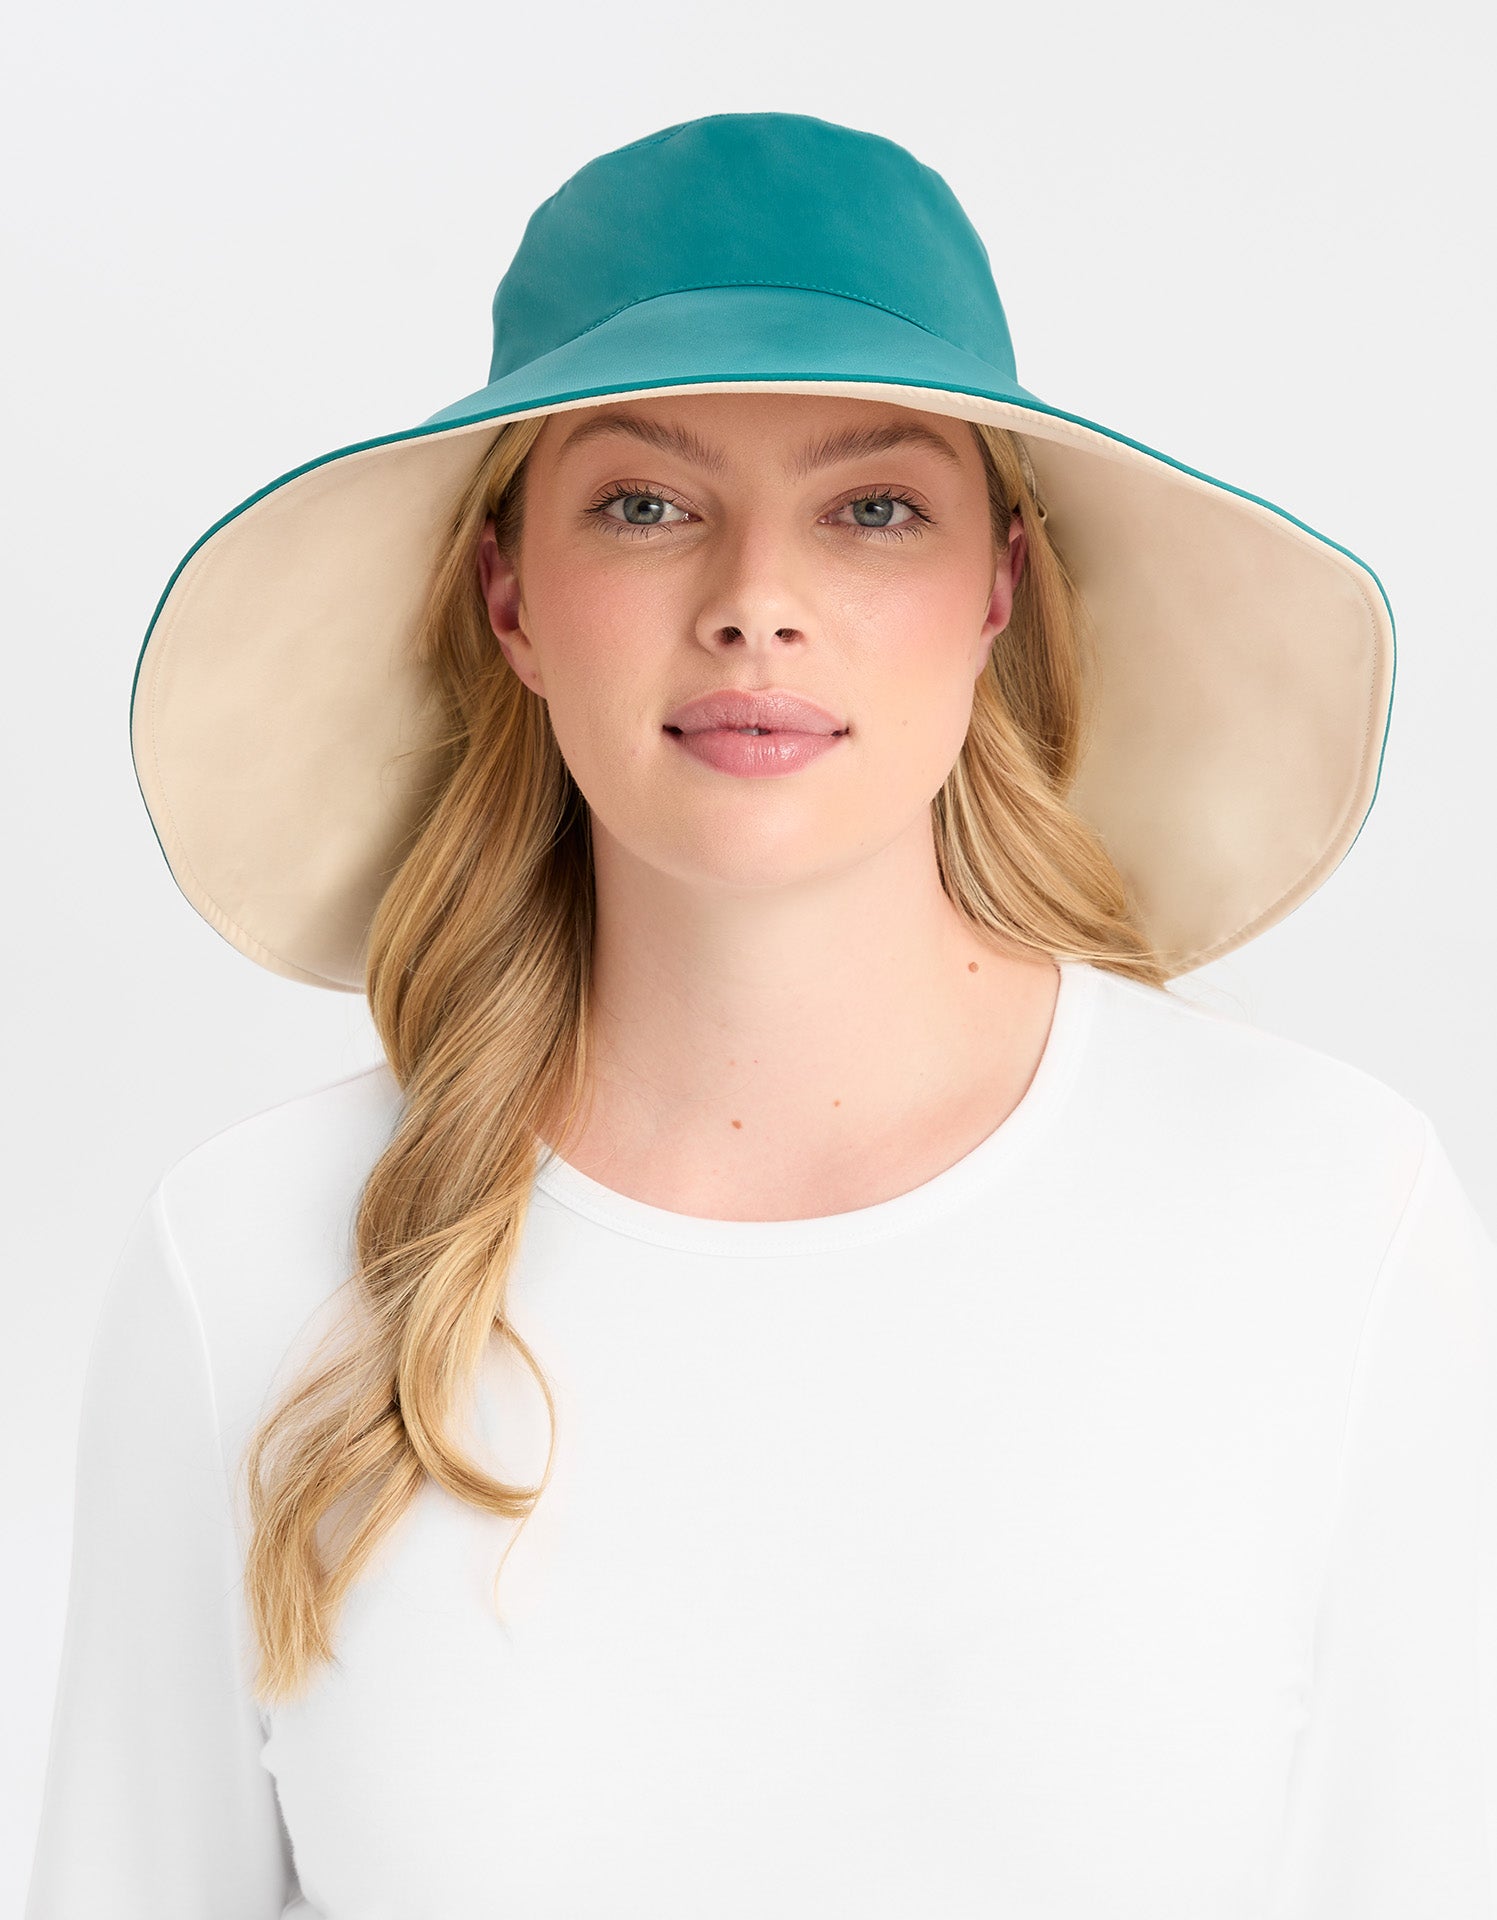 Biplut Women Sun Hat Anti-UV Wide Brim Sunscreen Protective Summer